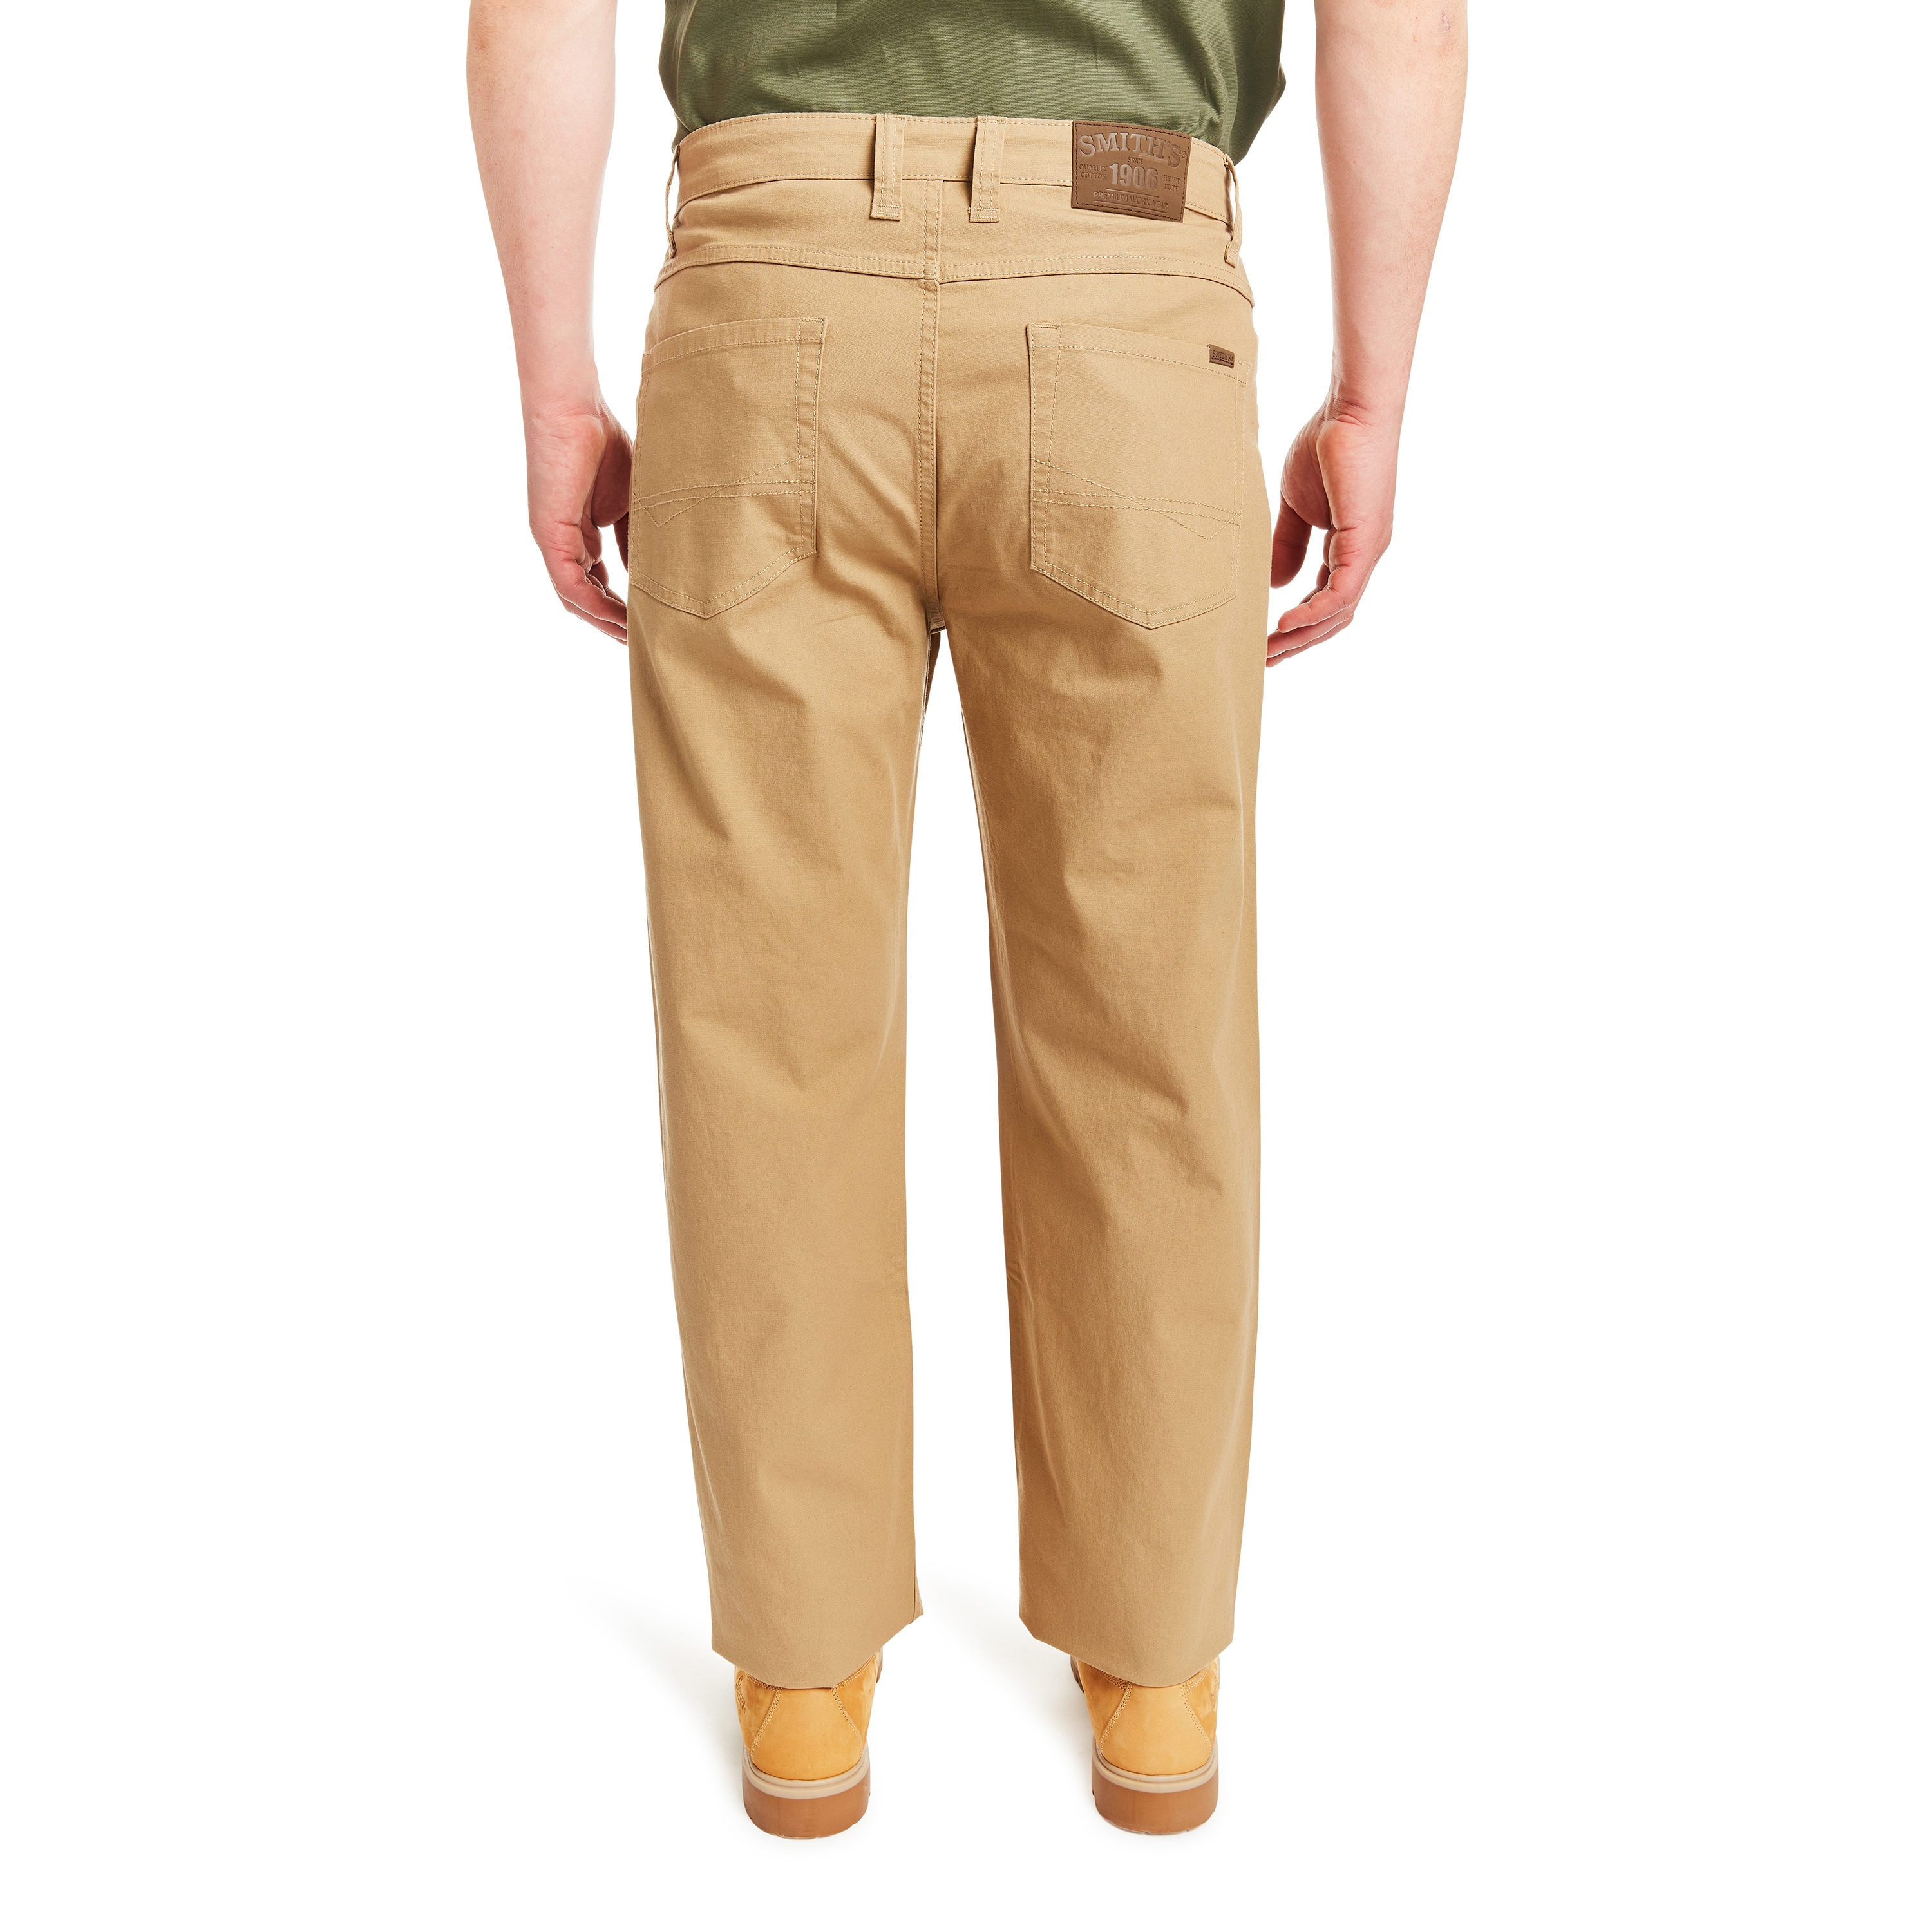 GEEK SQUAD Olive Khaki Pants Slacks MEN'S SIZE 30 X 36 | eBay